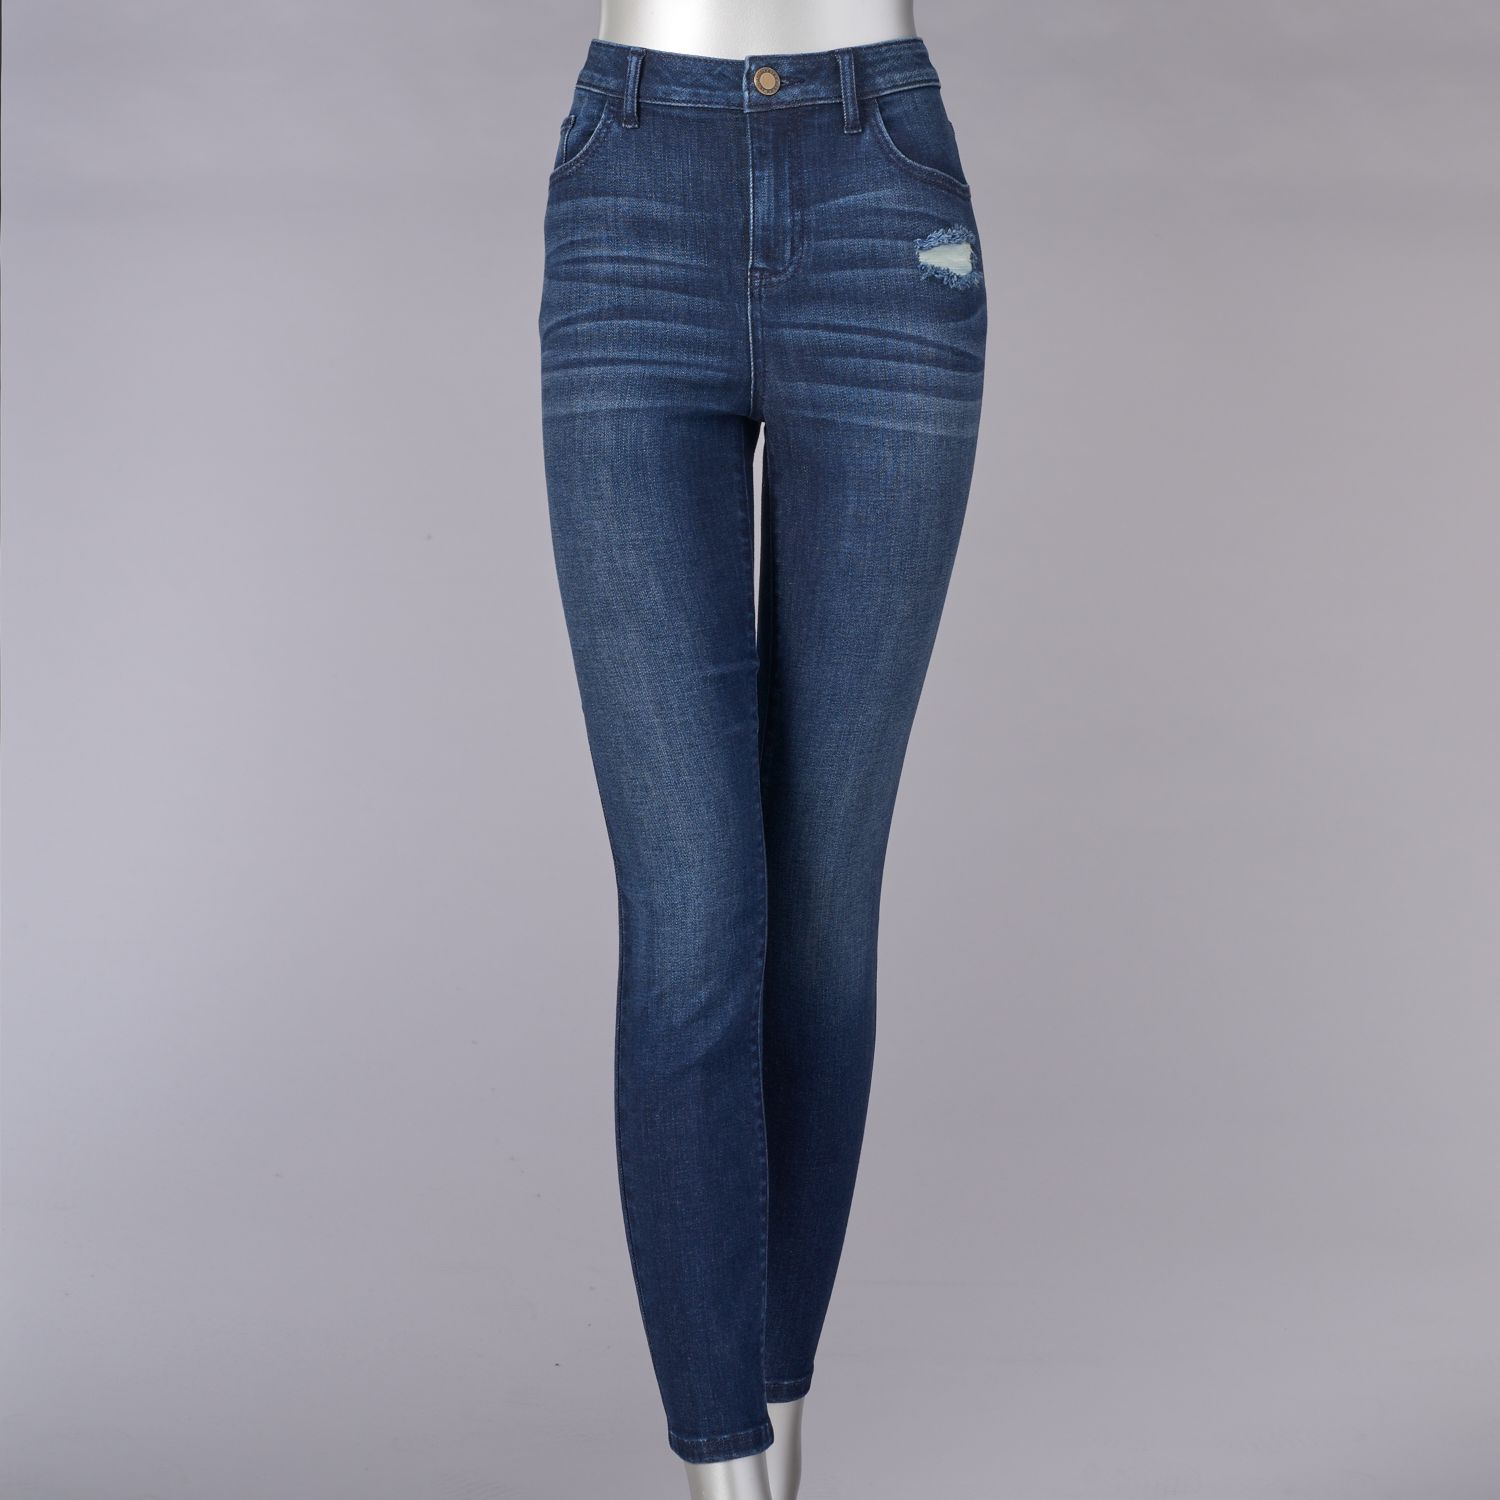 vera wang skinny jeans